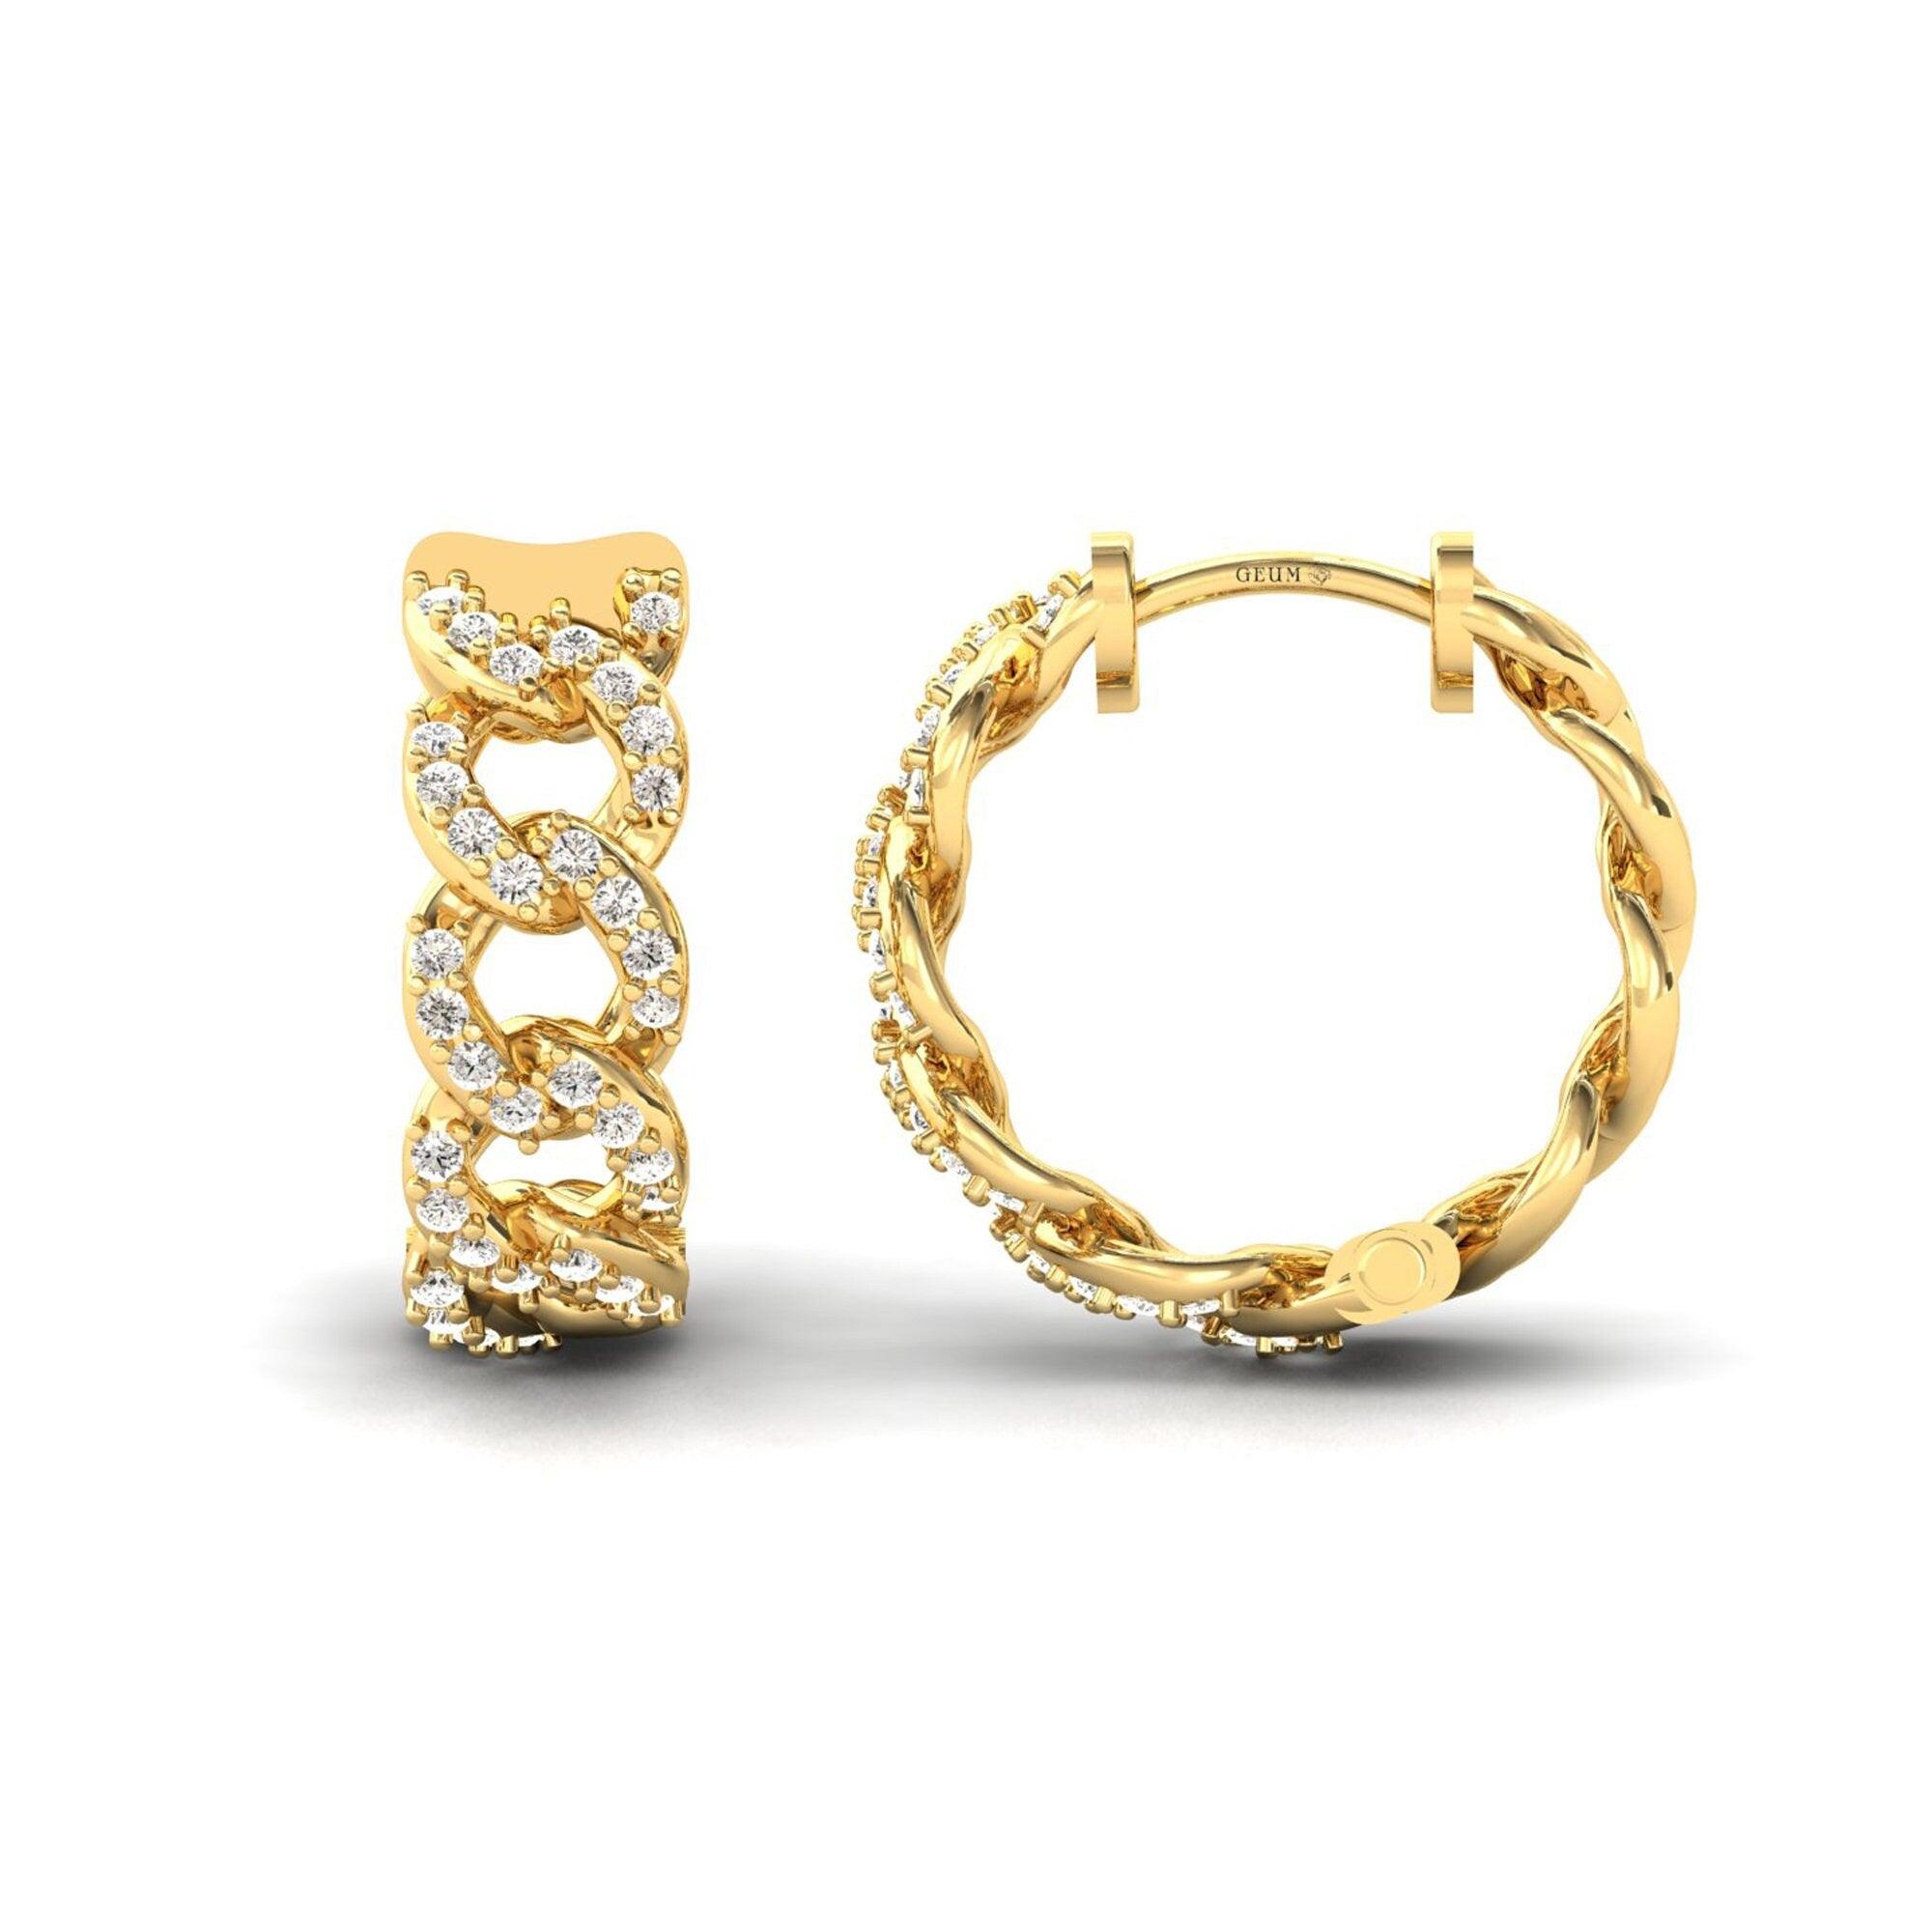 Small Diamond Hoop Earrings, Handmade Gold Earrings, Personalized Yellow/White Gold Earrings, Real Gold Fashion Earrings - GeumJewels